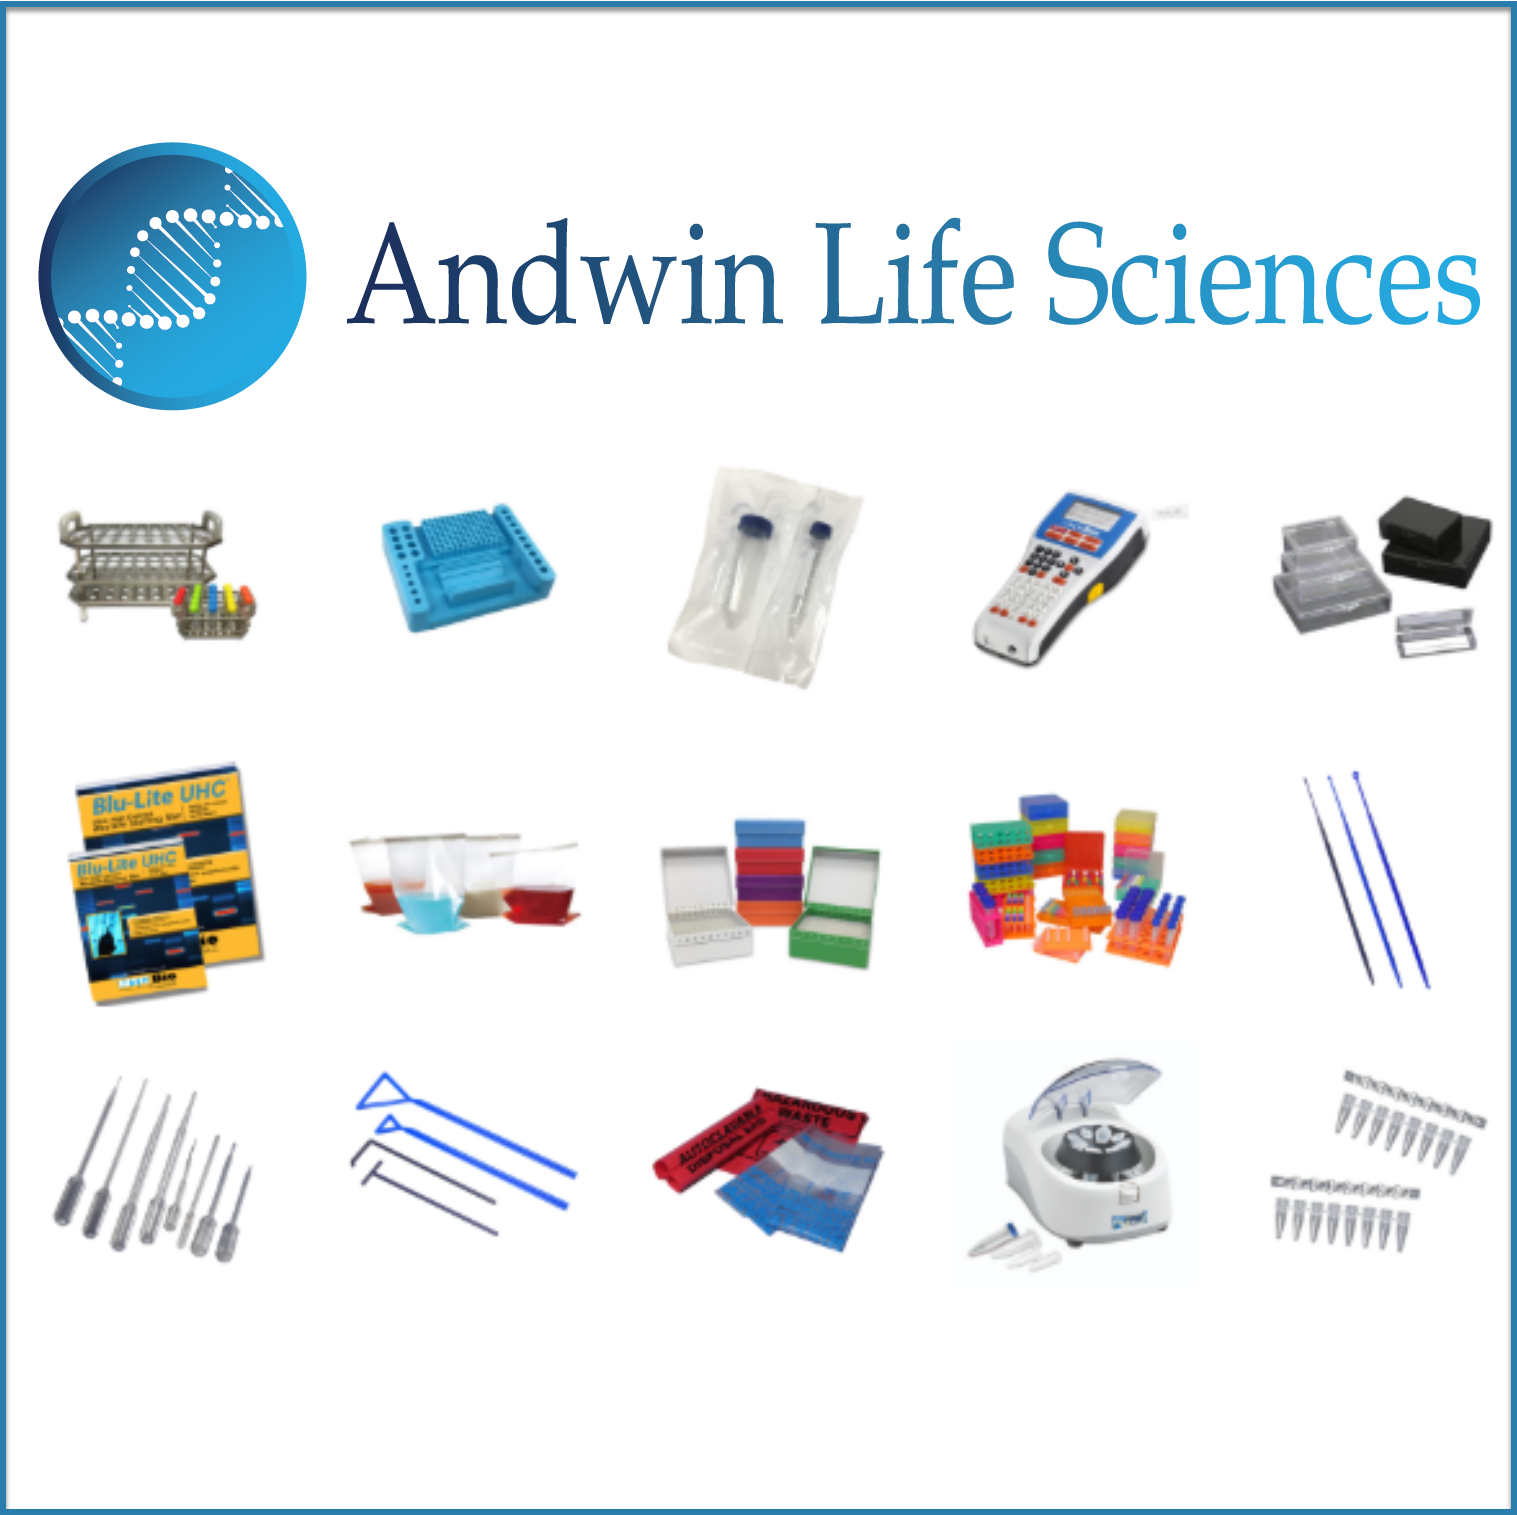 Andwin Scientific